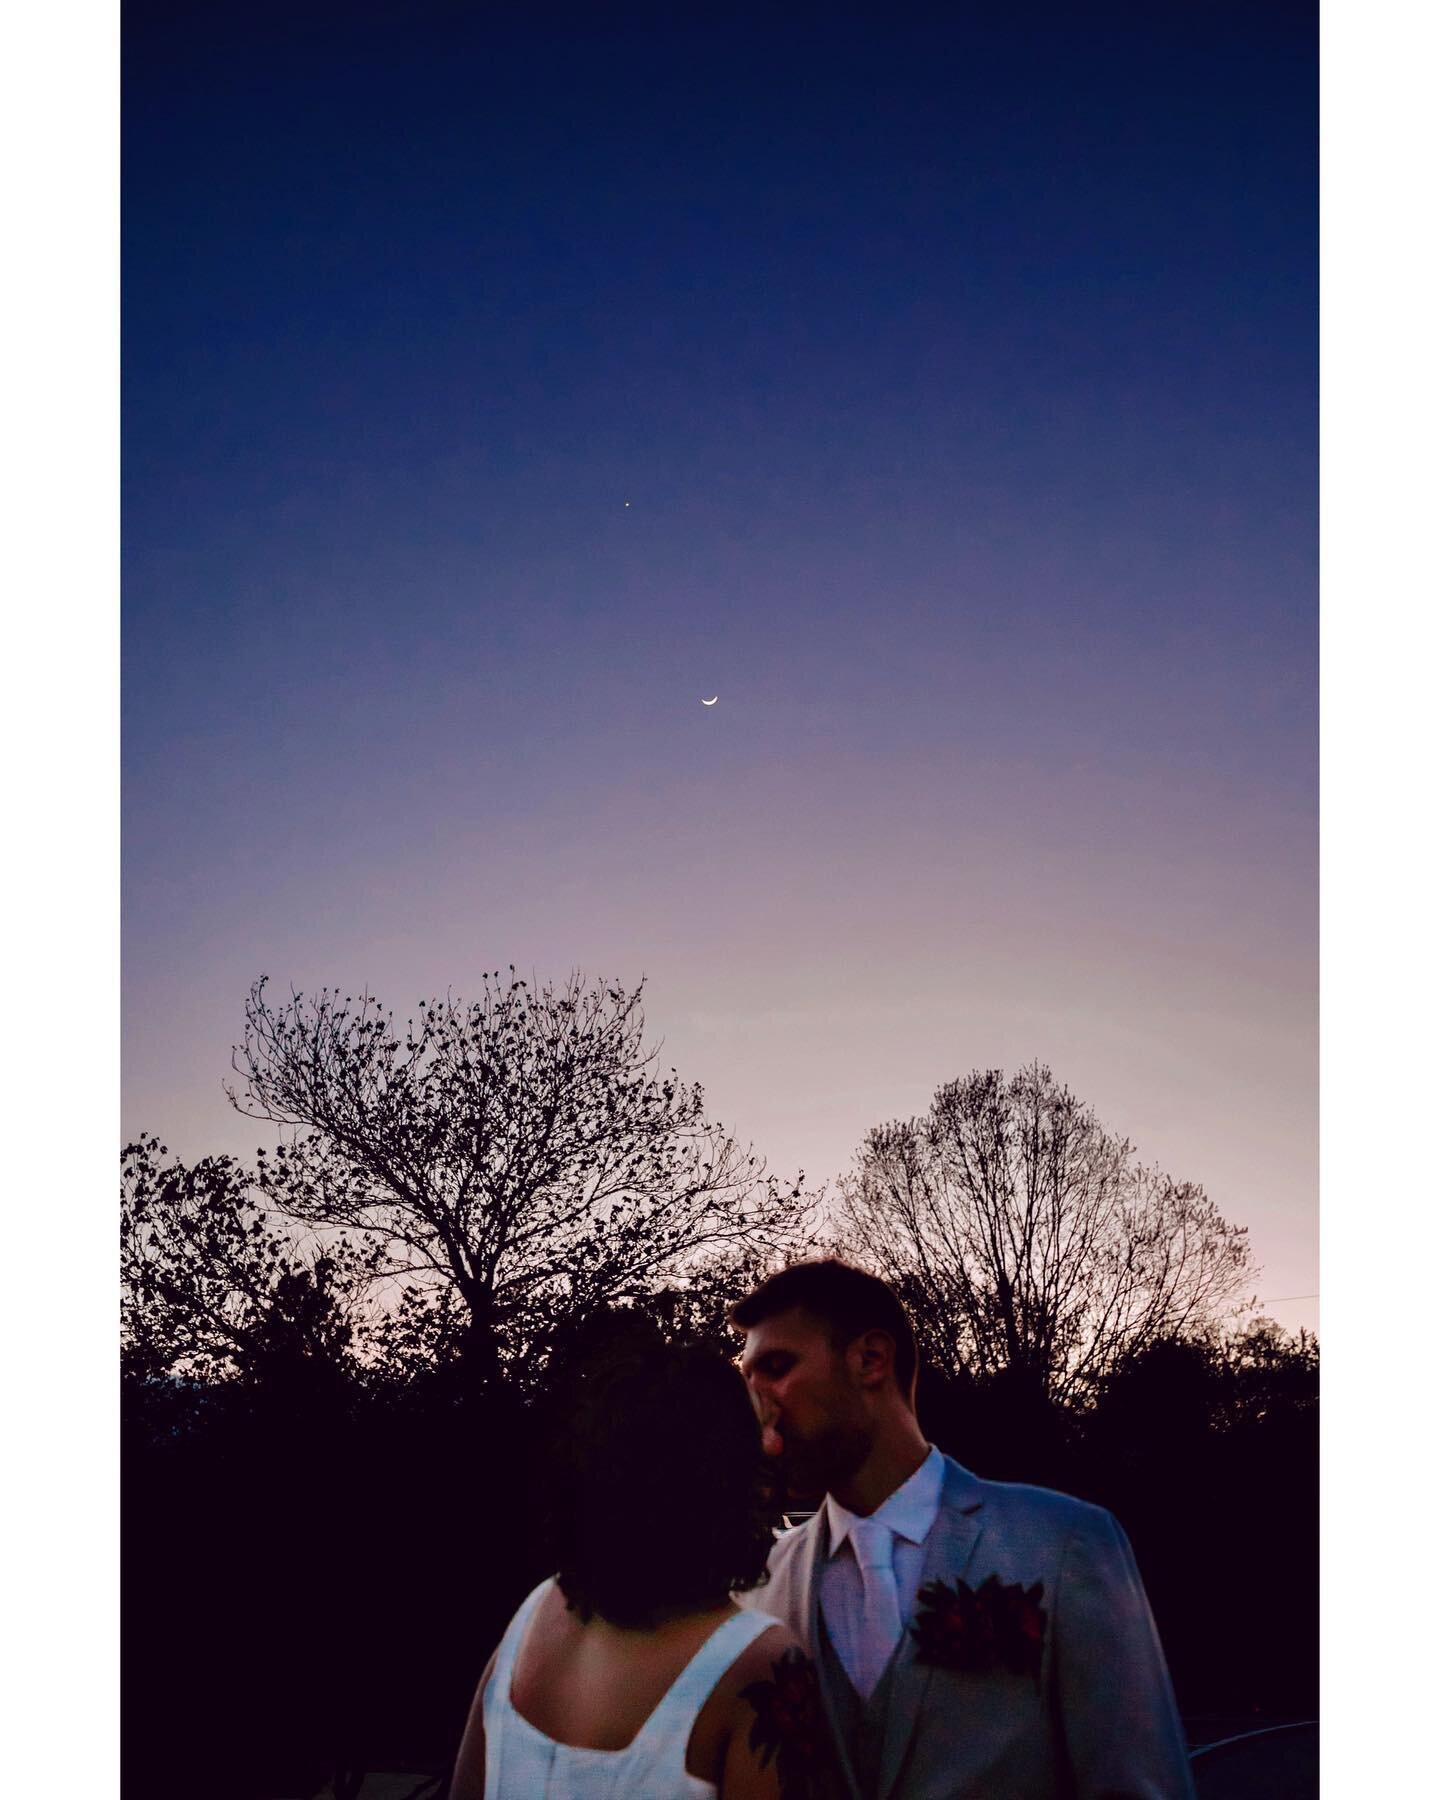 🌙 hey moon, thanks for coming to the party. 
.
.
.
.
.
#ashevilleweddingphotographer #sunsetjunkie #weddingnight #weddingphotography #weddinginspo